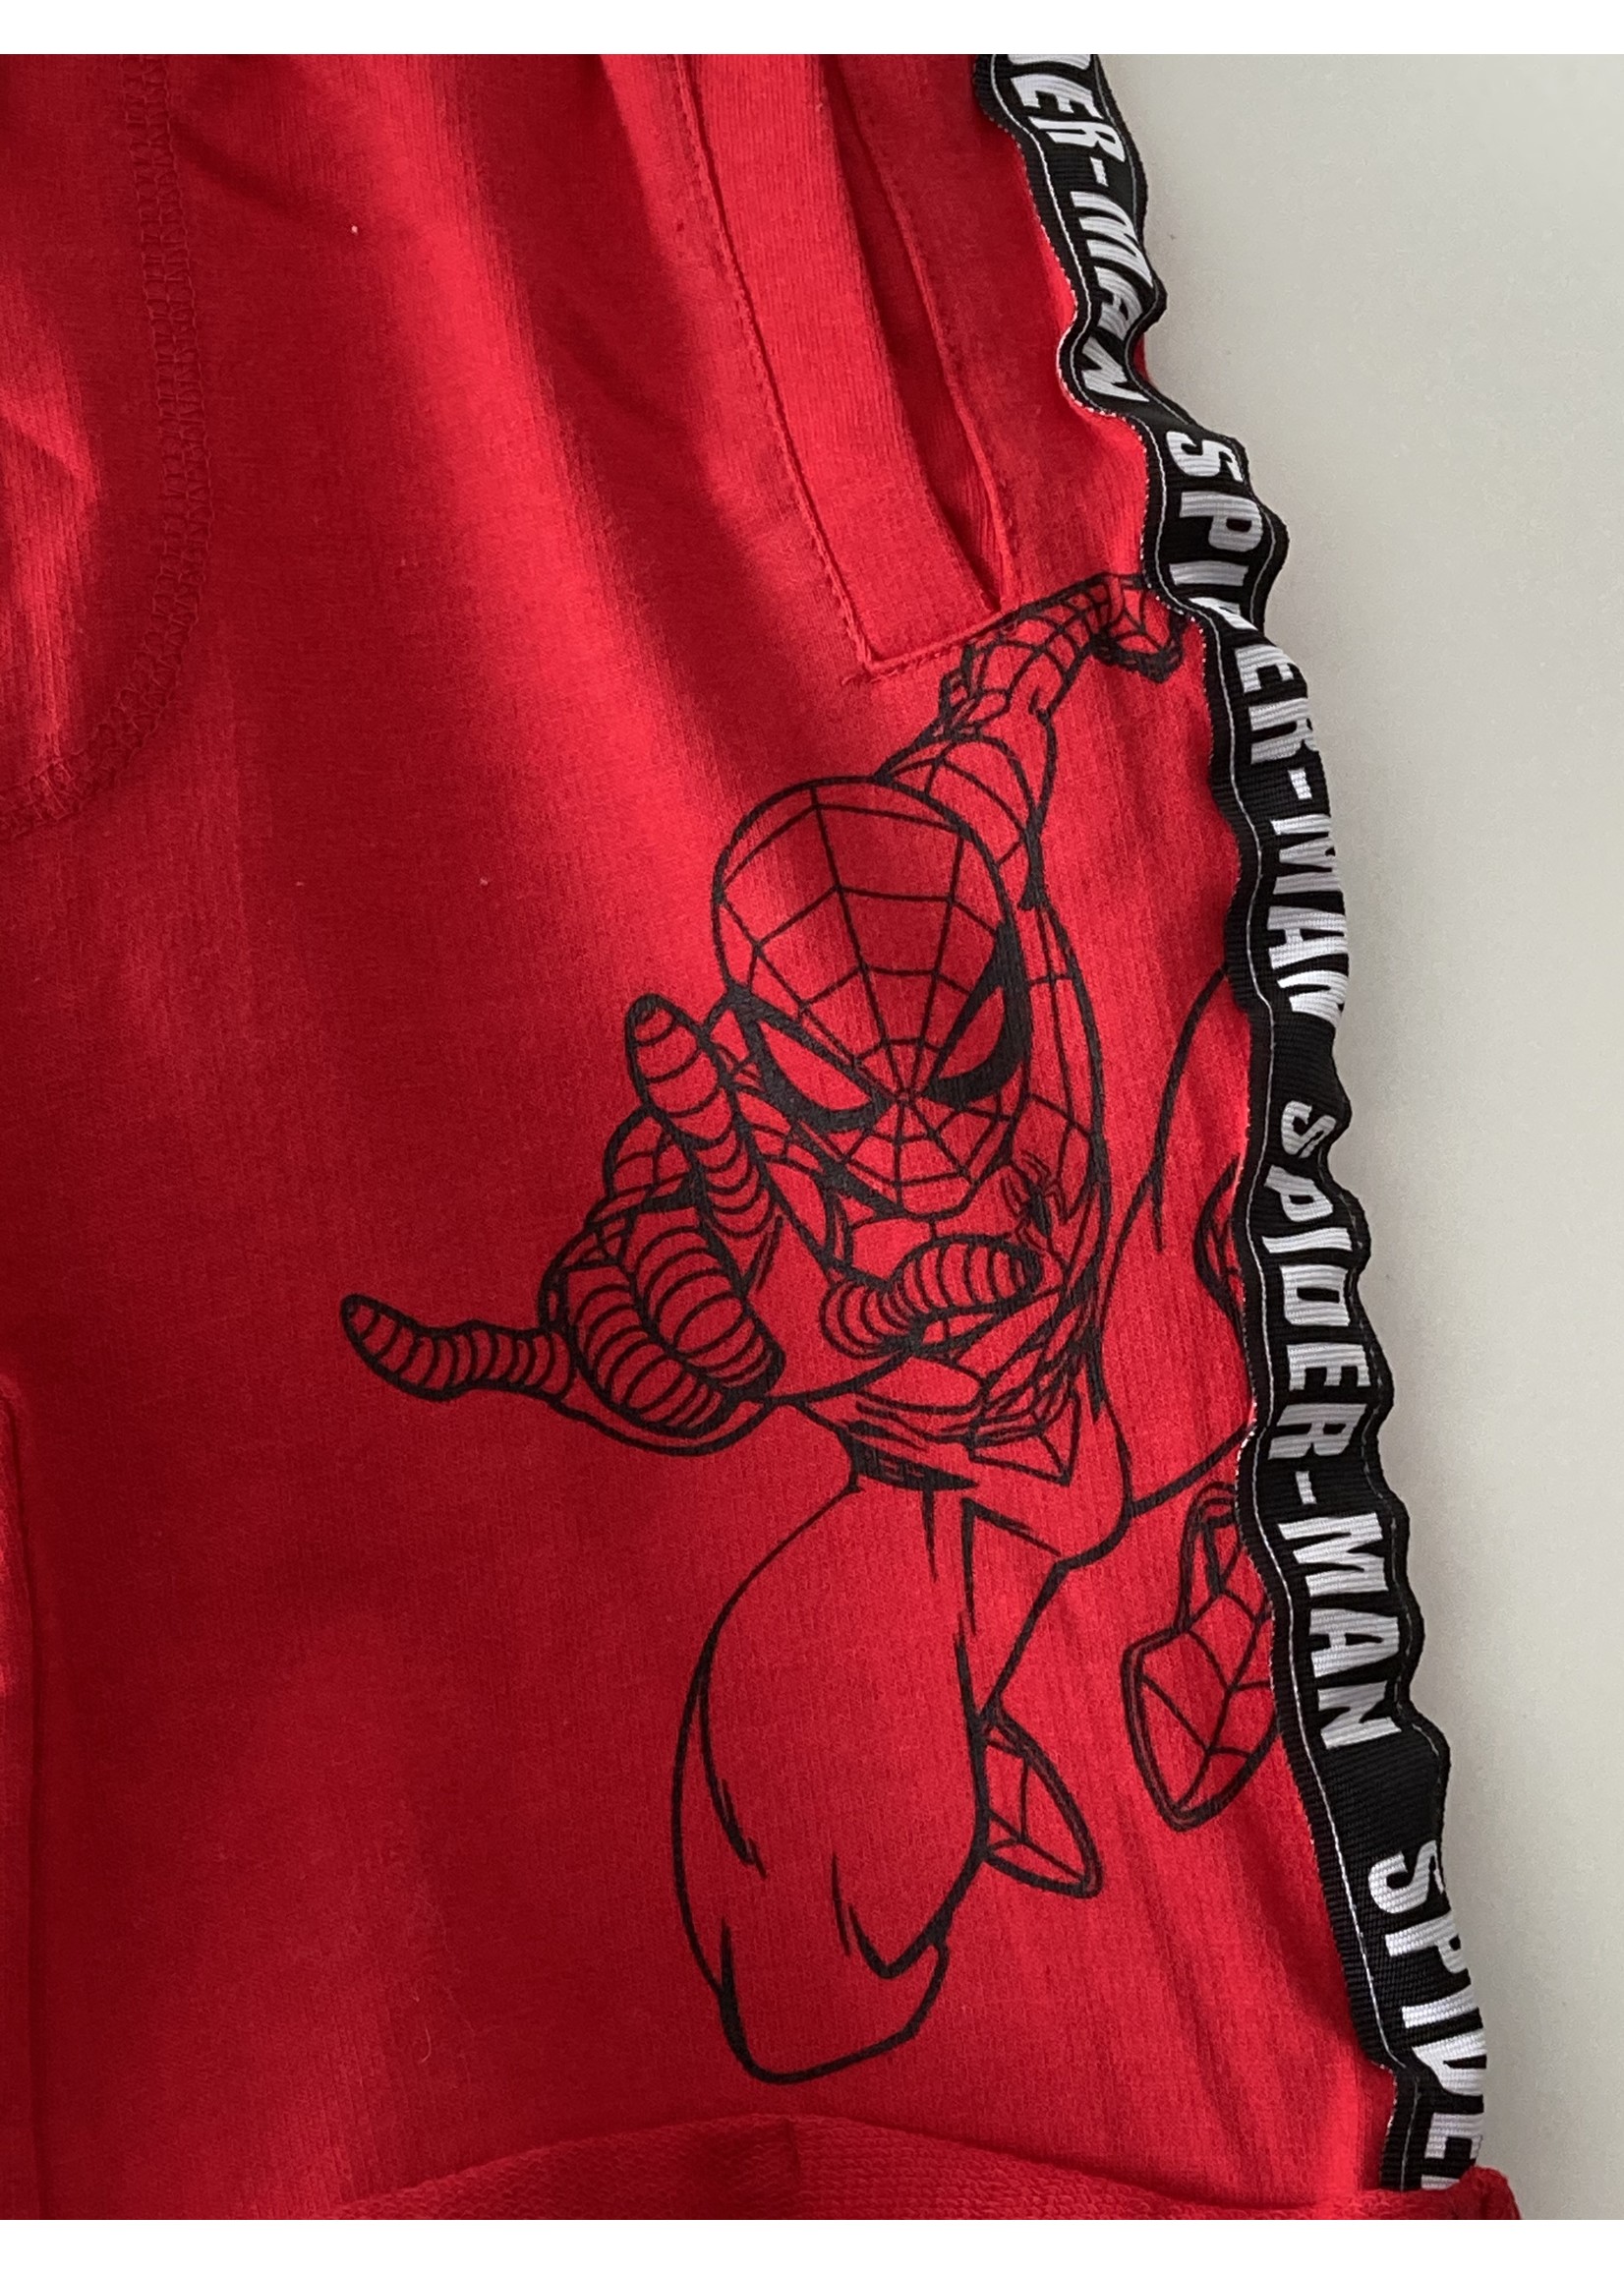 Marvel Spiderman shorts from Marvel red